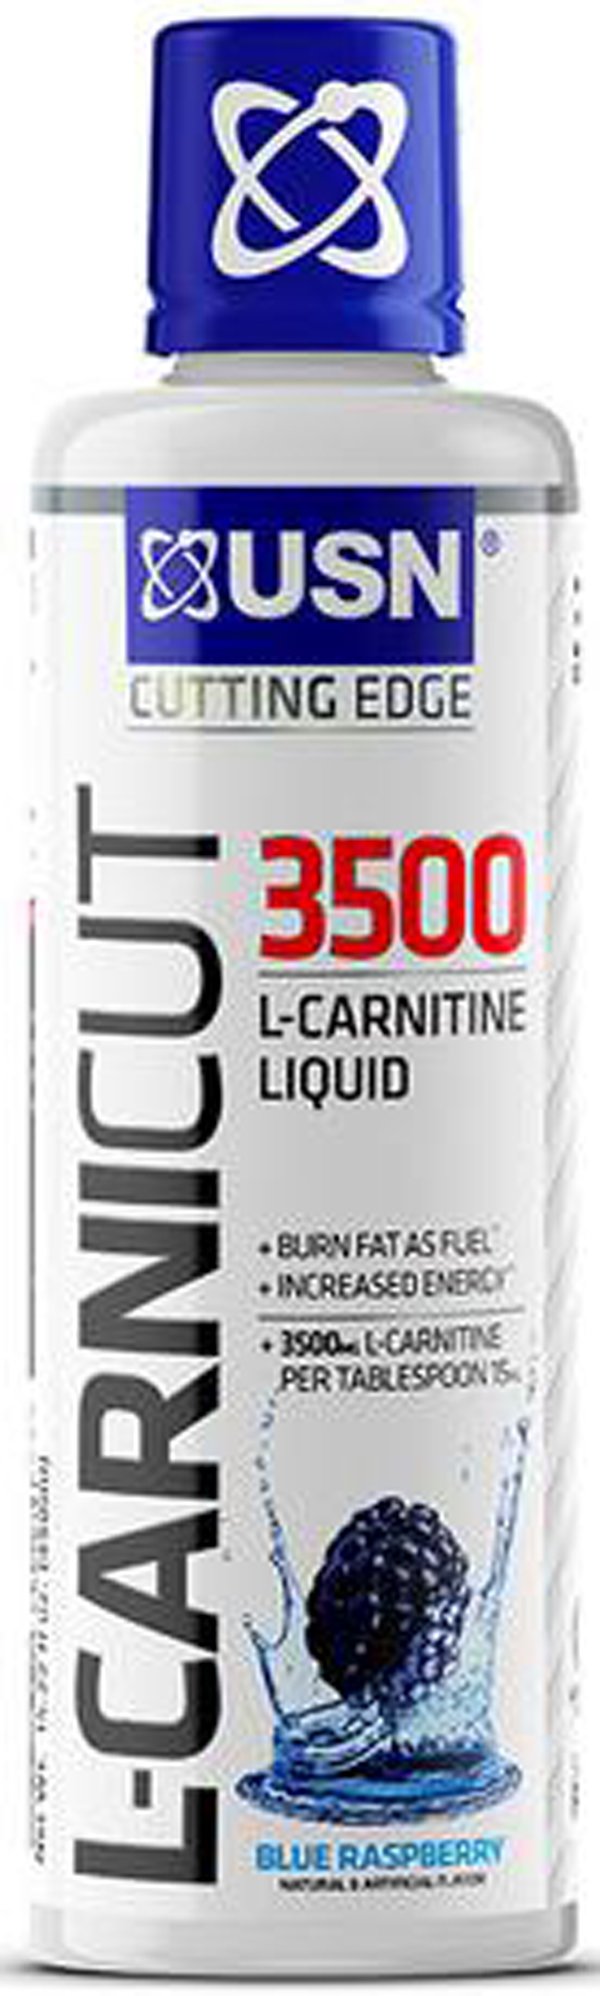 USN L-Carnicut 3500 Liquid|Lowcostvitamin.com